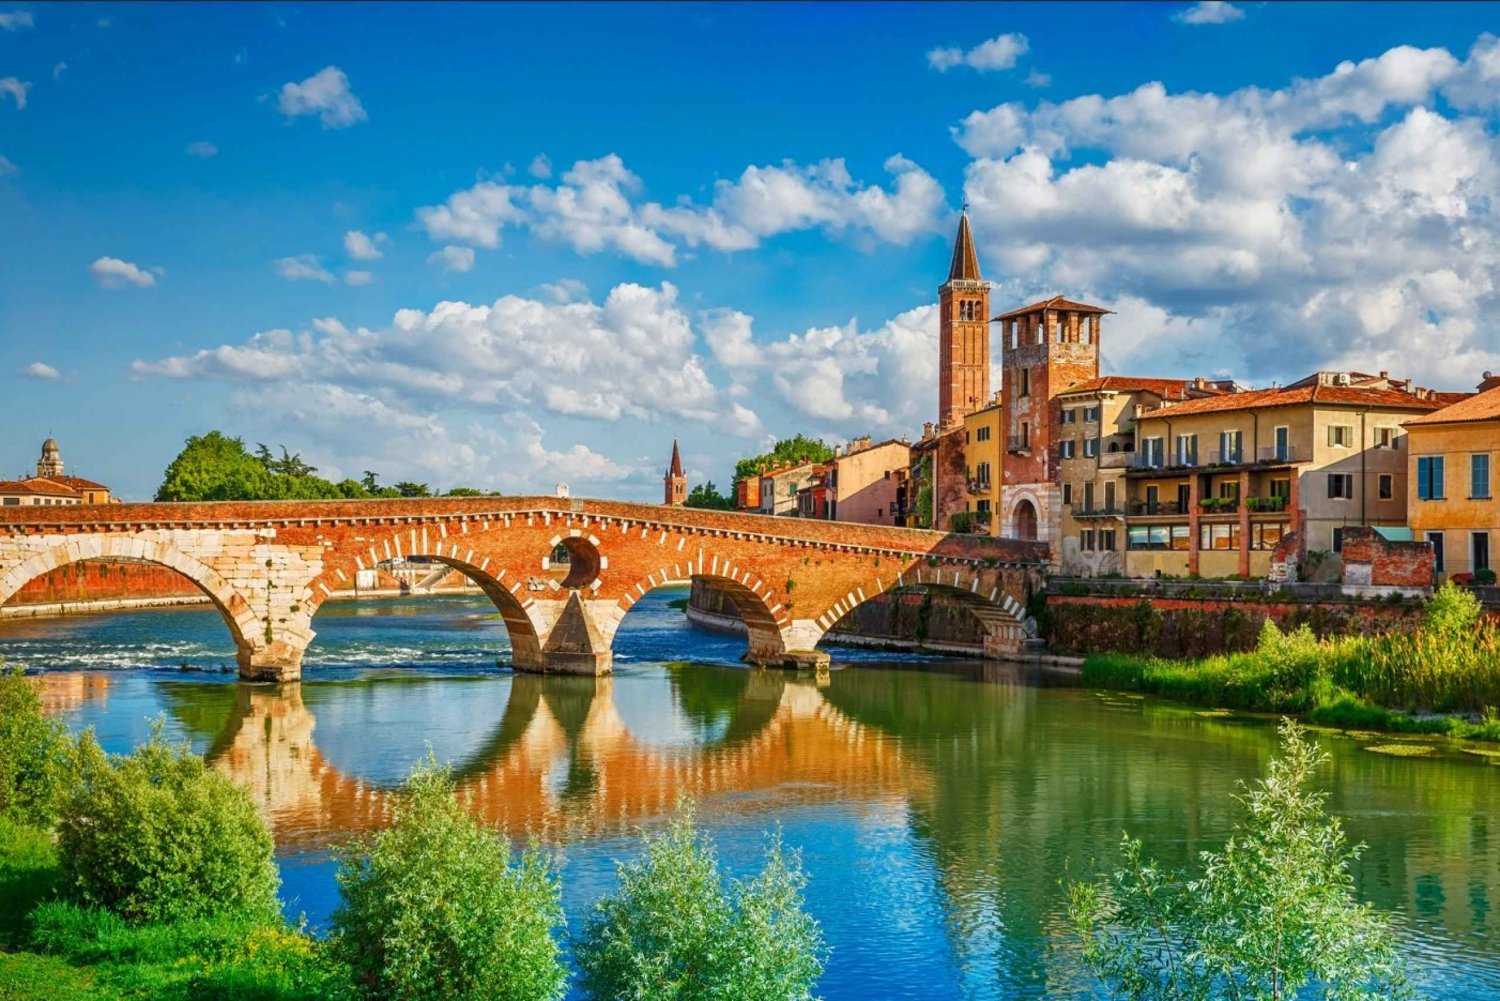 Milan: Verona Day Tour with a Lake Garda Cruise to Sirmione